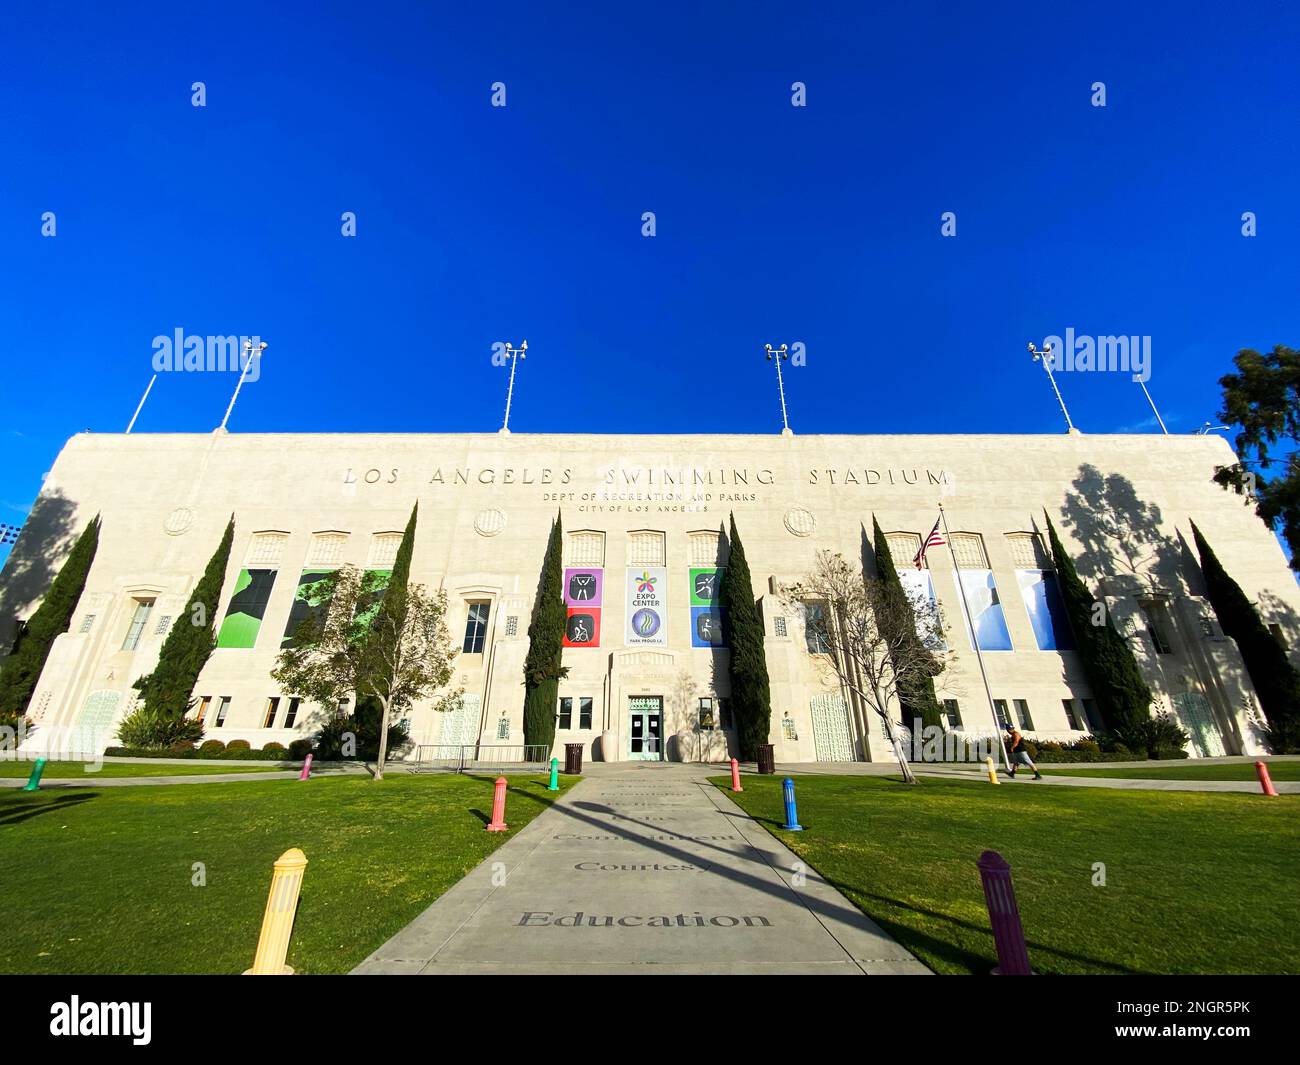 The Los Angeles Swimming Stadium, LA84 Foundation/John C. Argue Swim Stadium Stock Photo